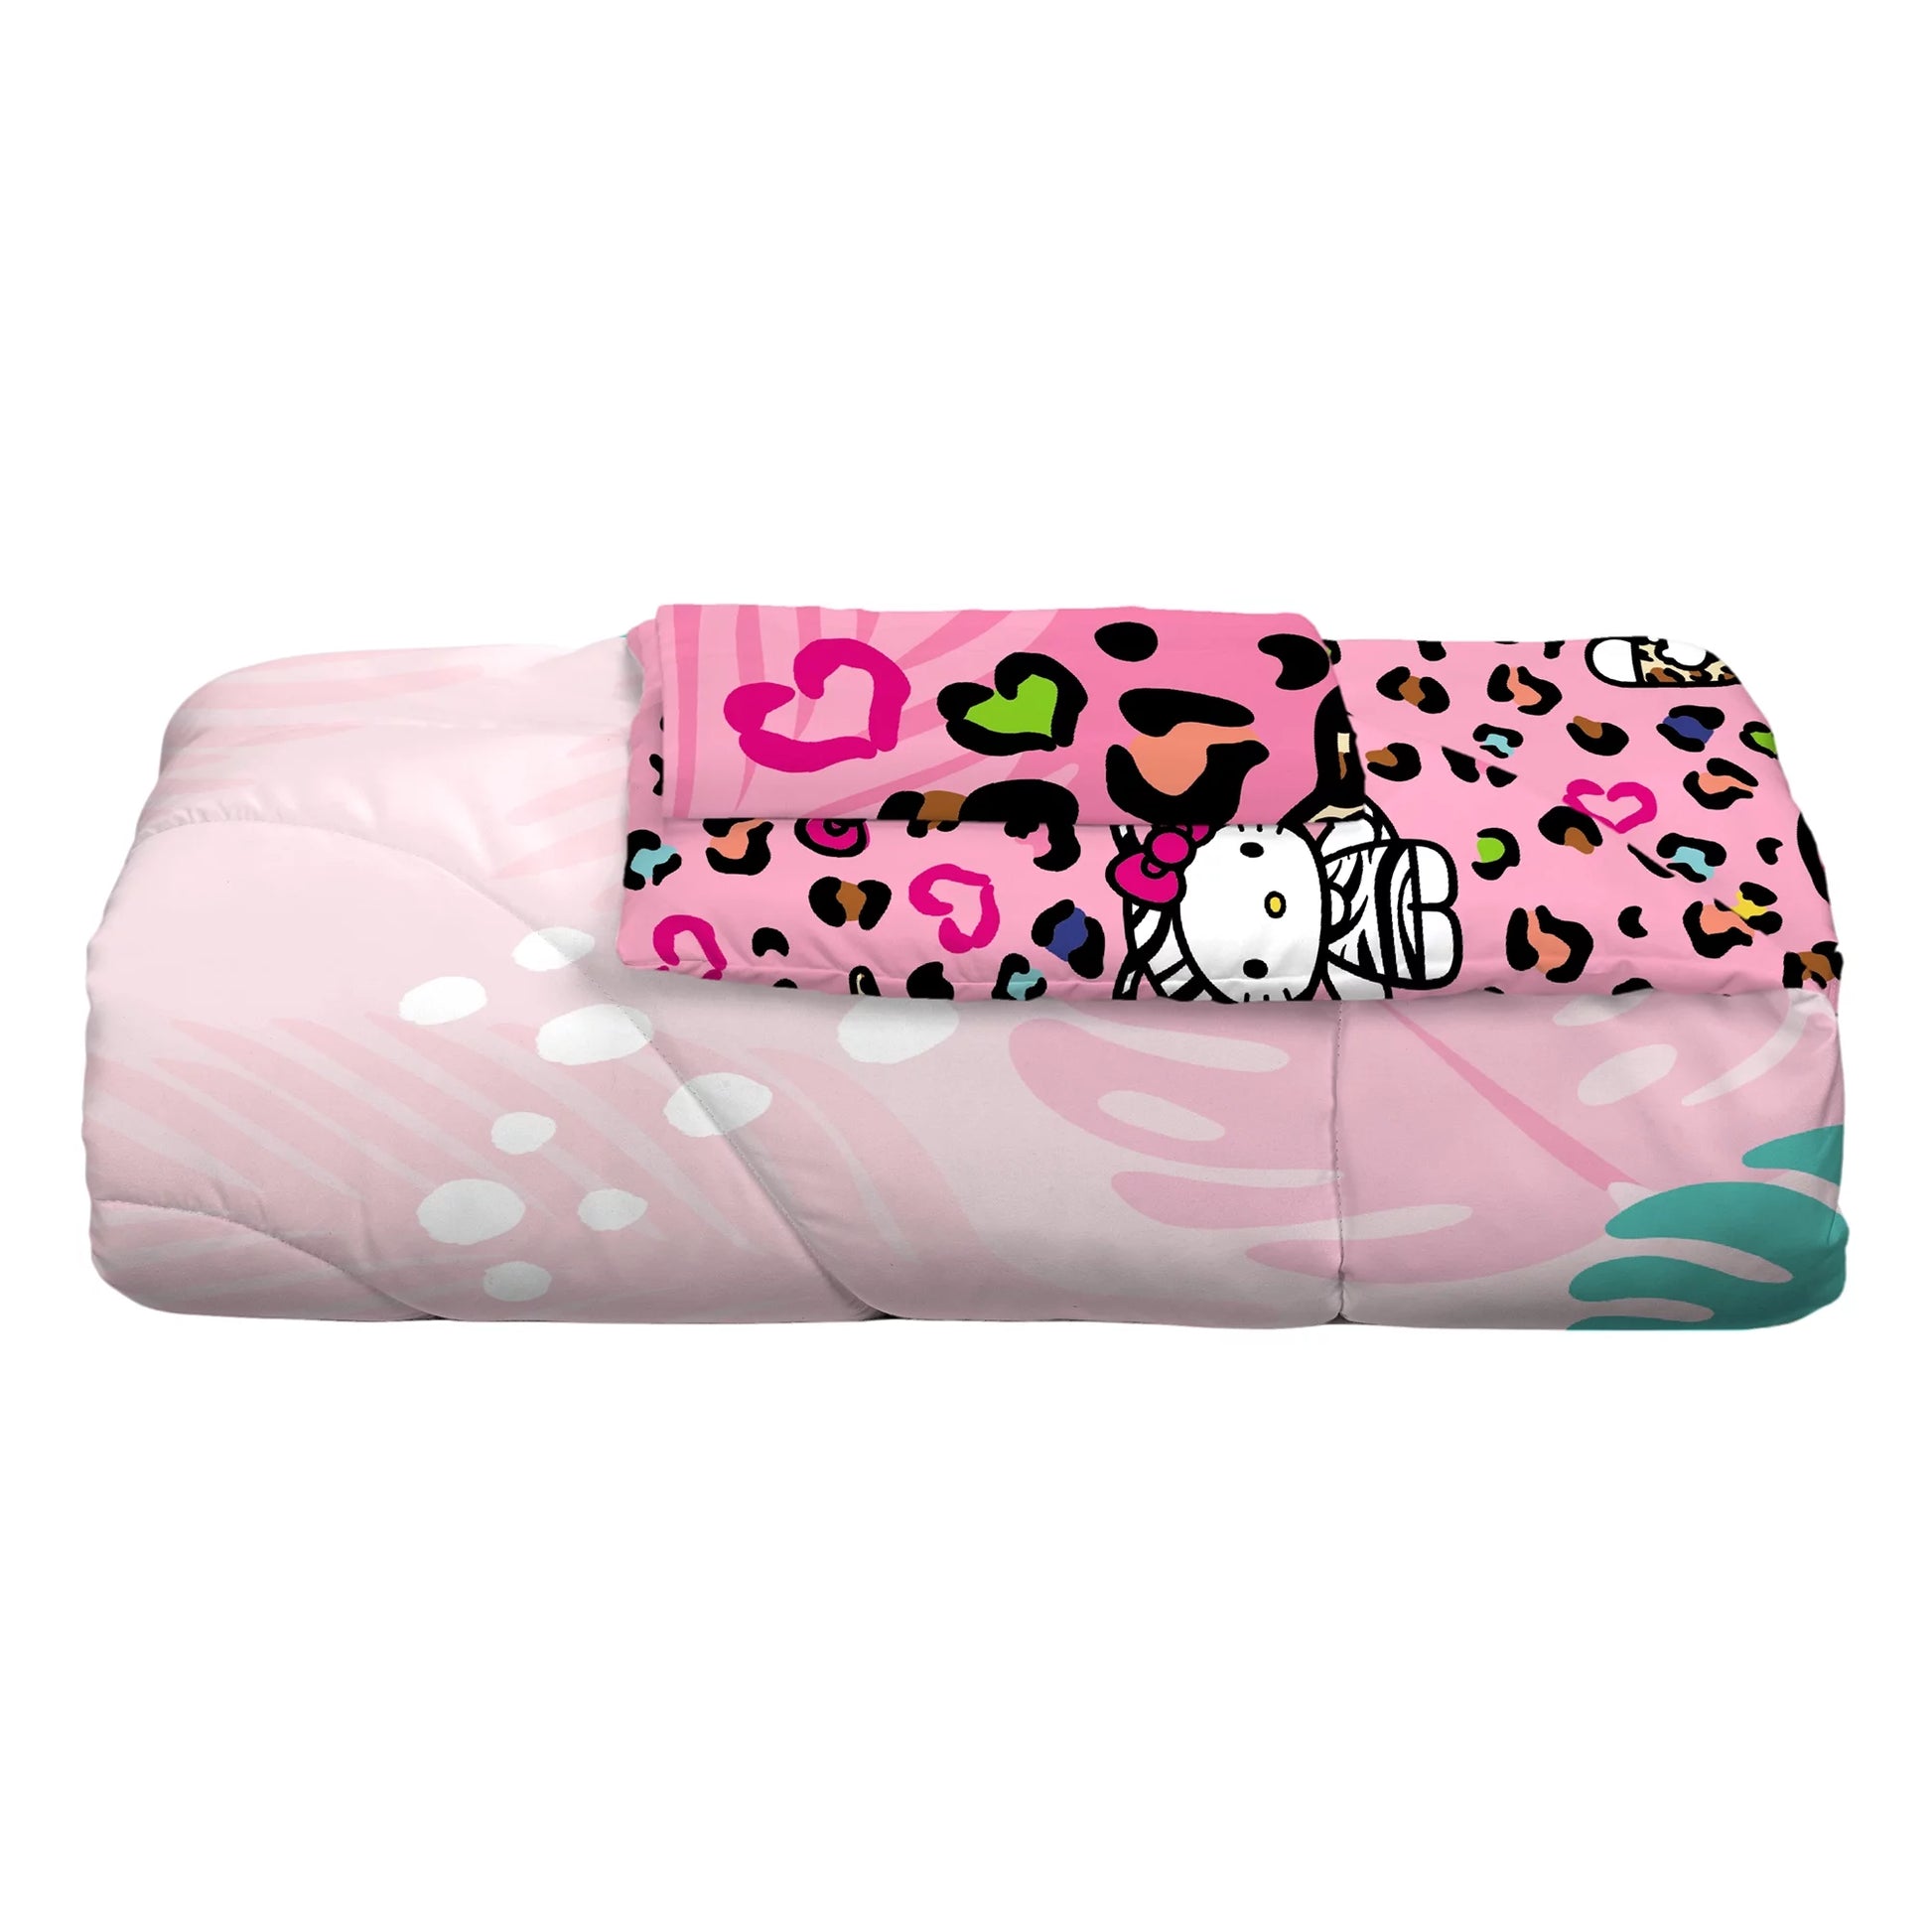 Kids Comforter Set, 2-Piece, Twin/Full, Reversible, Pink, Sanrio